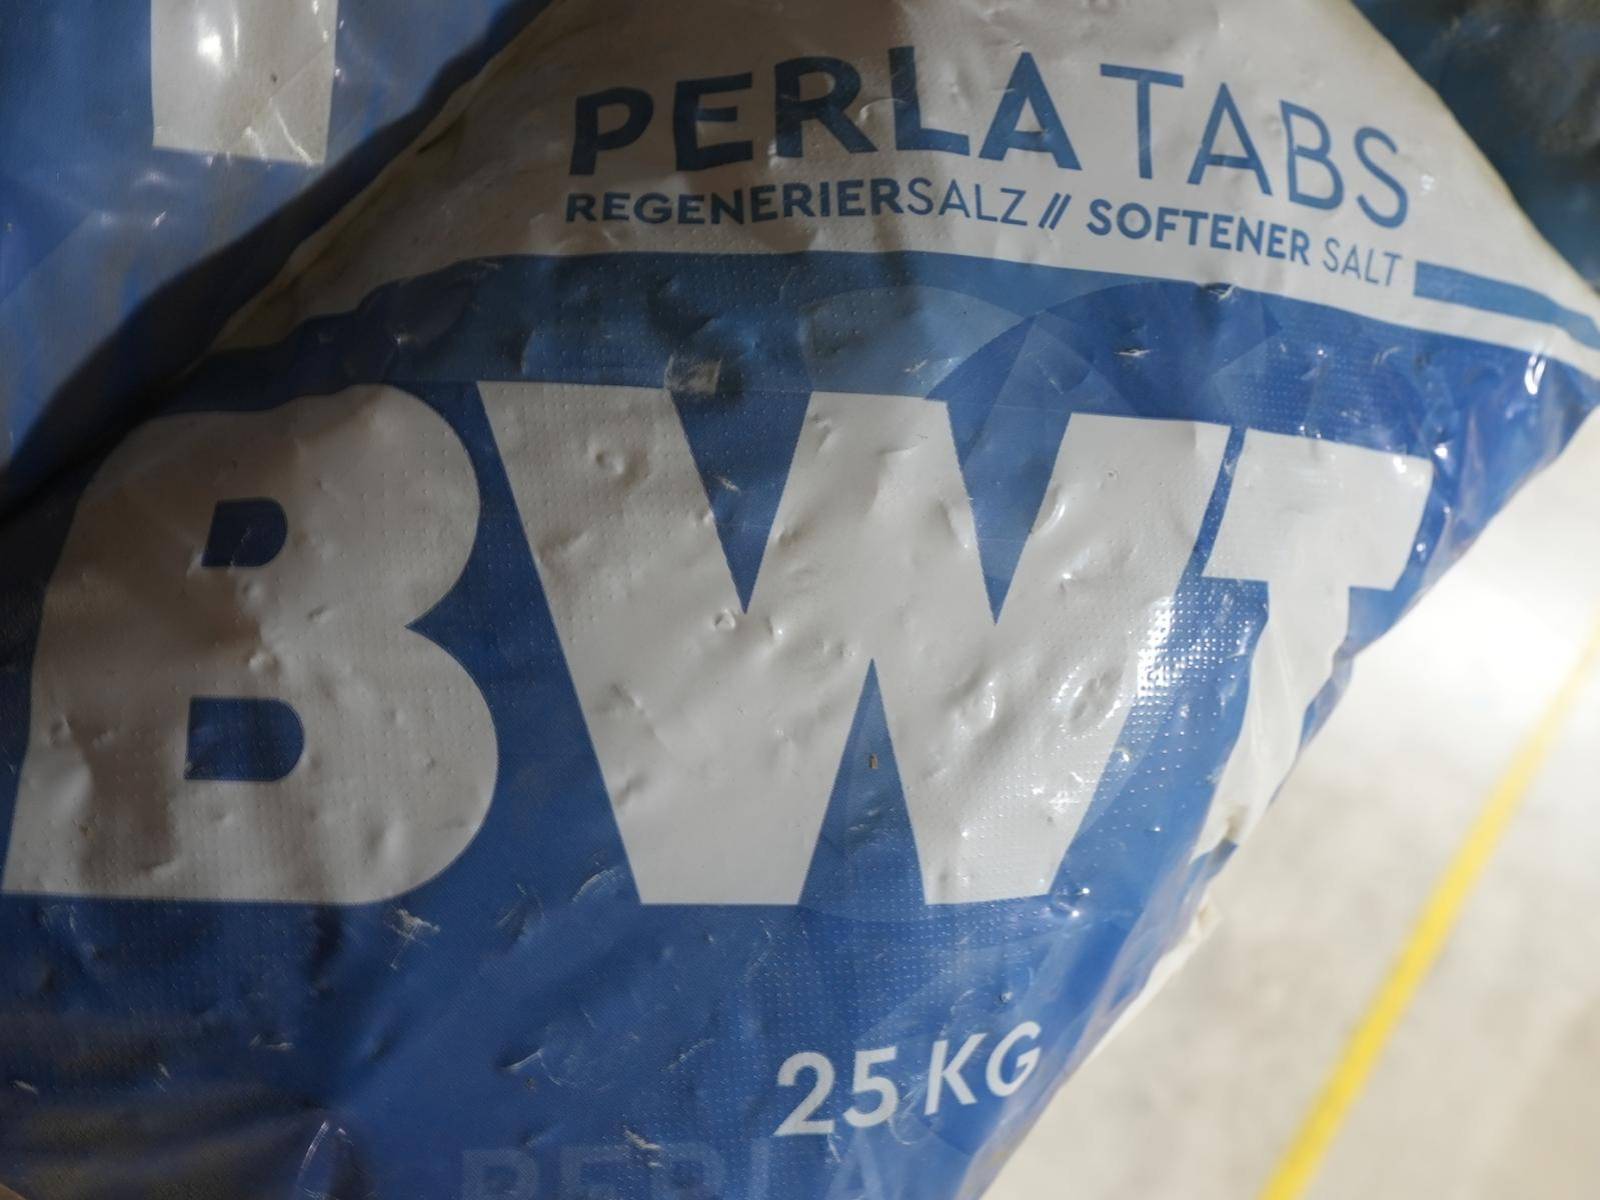 Auction 20.2.24 - Softener salt BWT Perla TABS, Set (35x25kg)